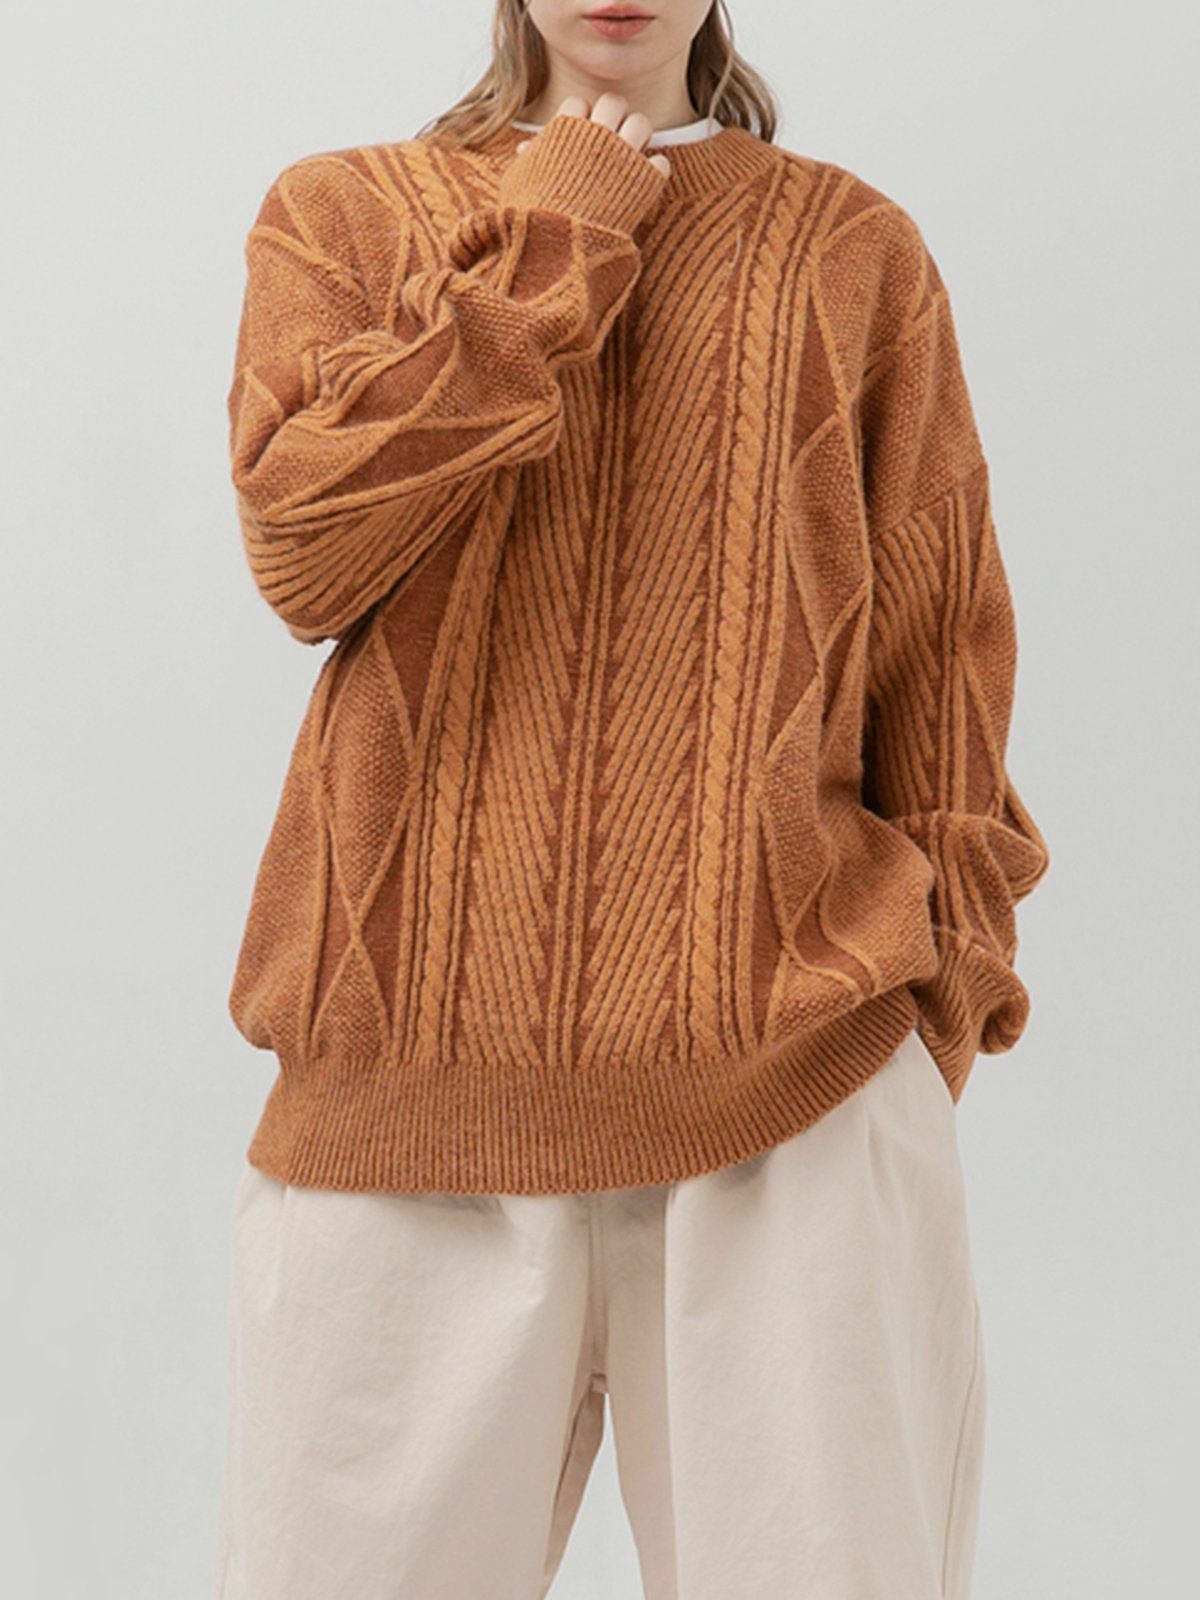 knit rhombus sweater retro & edgy urban fashion 7388